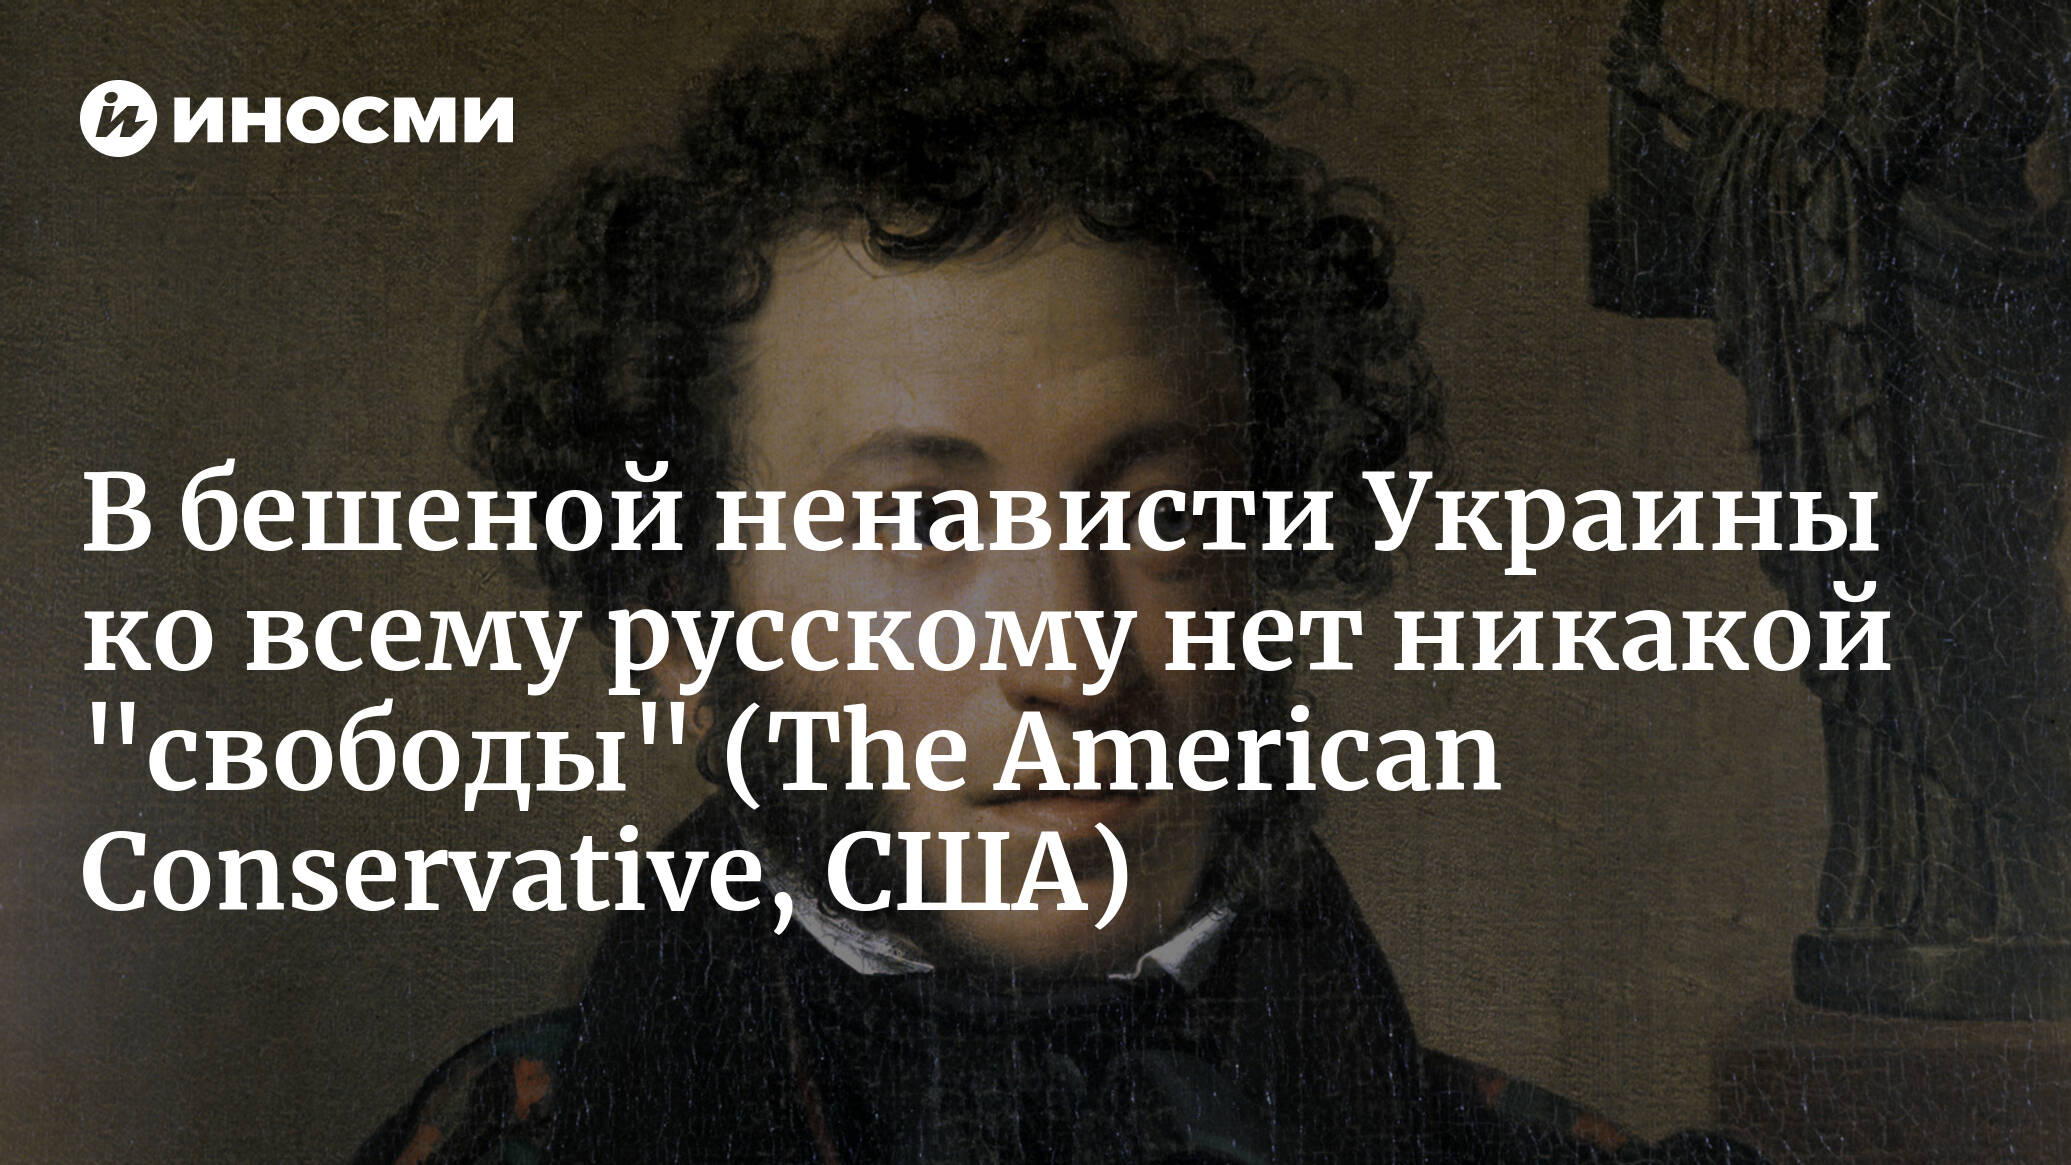 Пушкин на Украине или в Украине. Бесит ненавижу